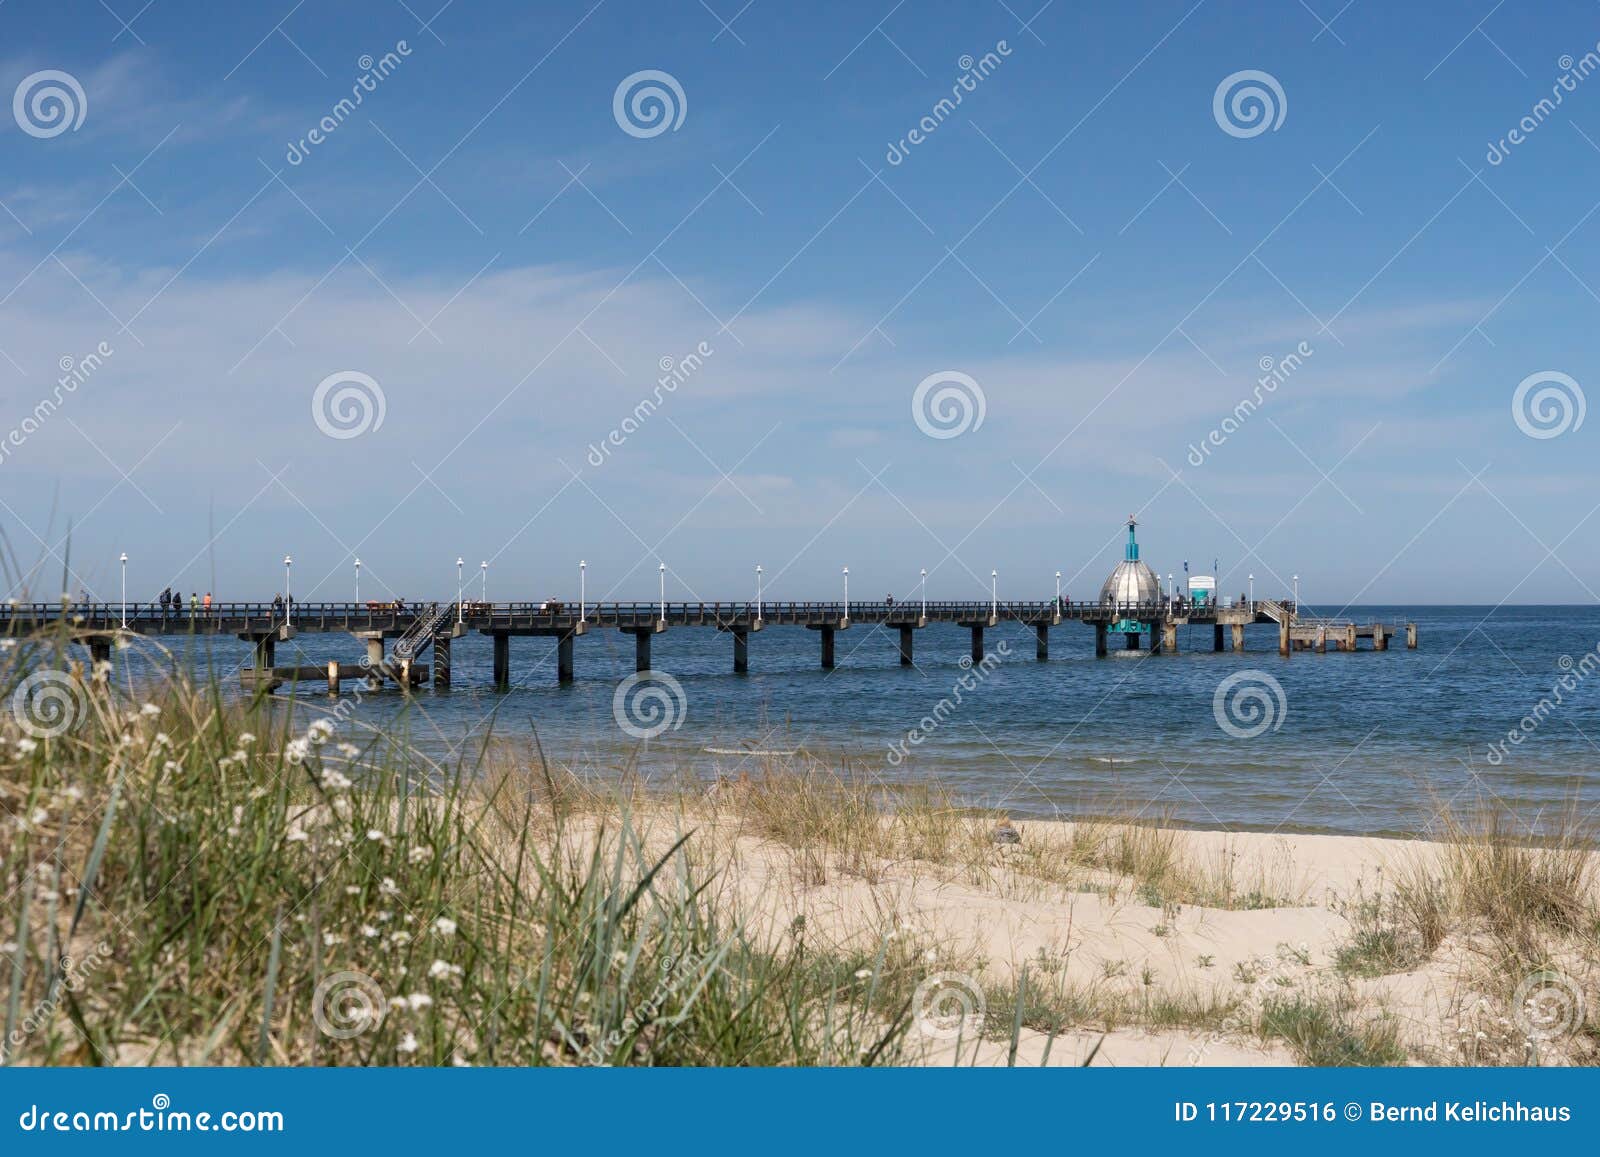 pier vineta bridge and submarine at zinnowitz usedom